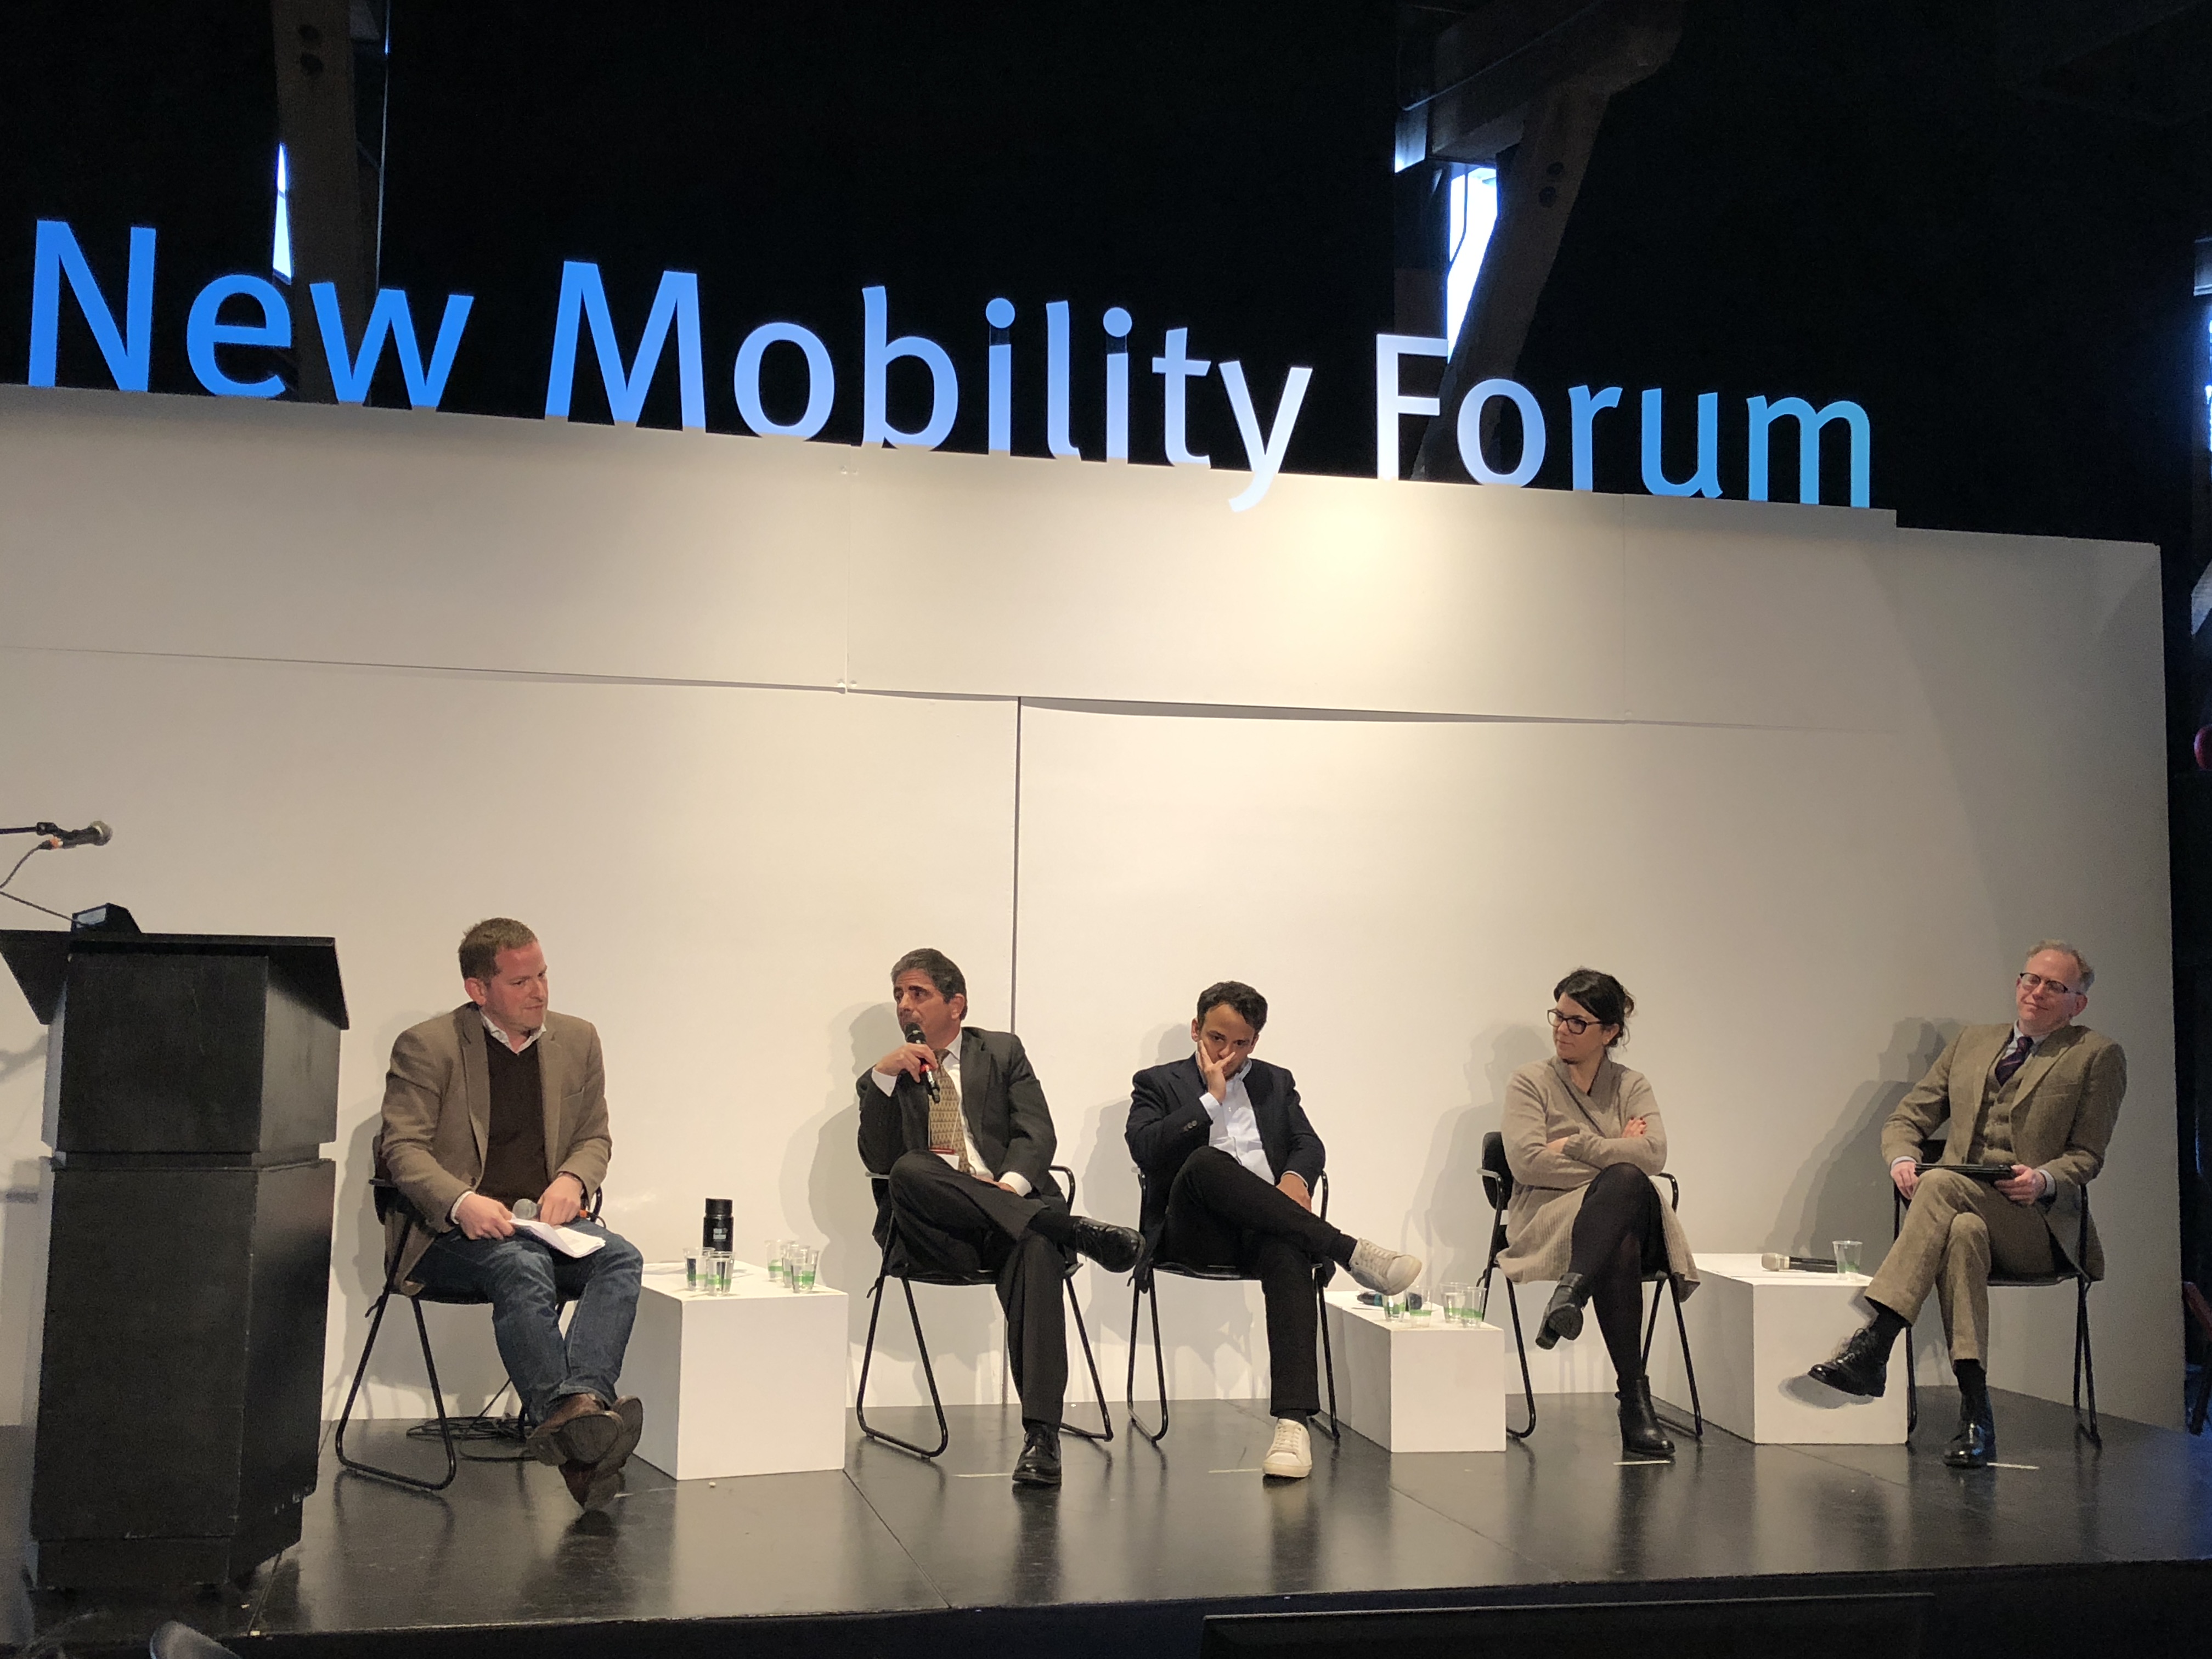 TransLink New Mobility Forum